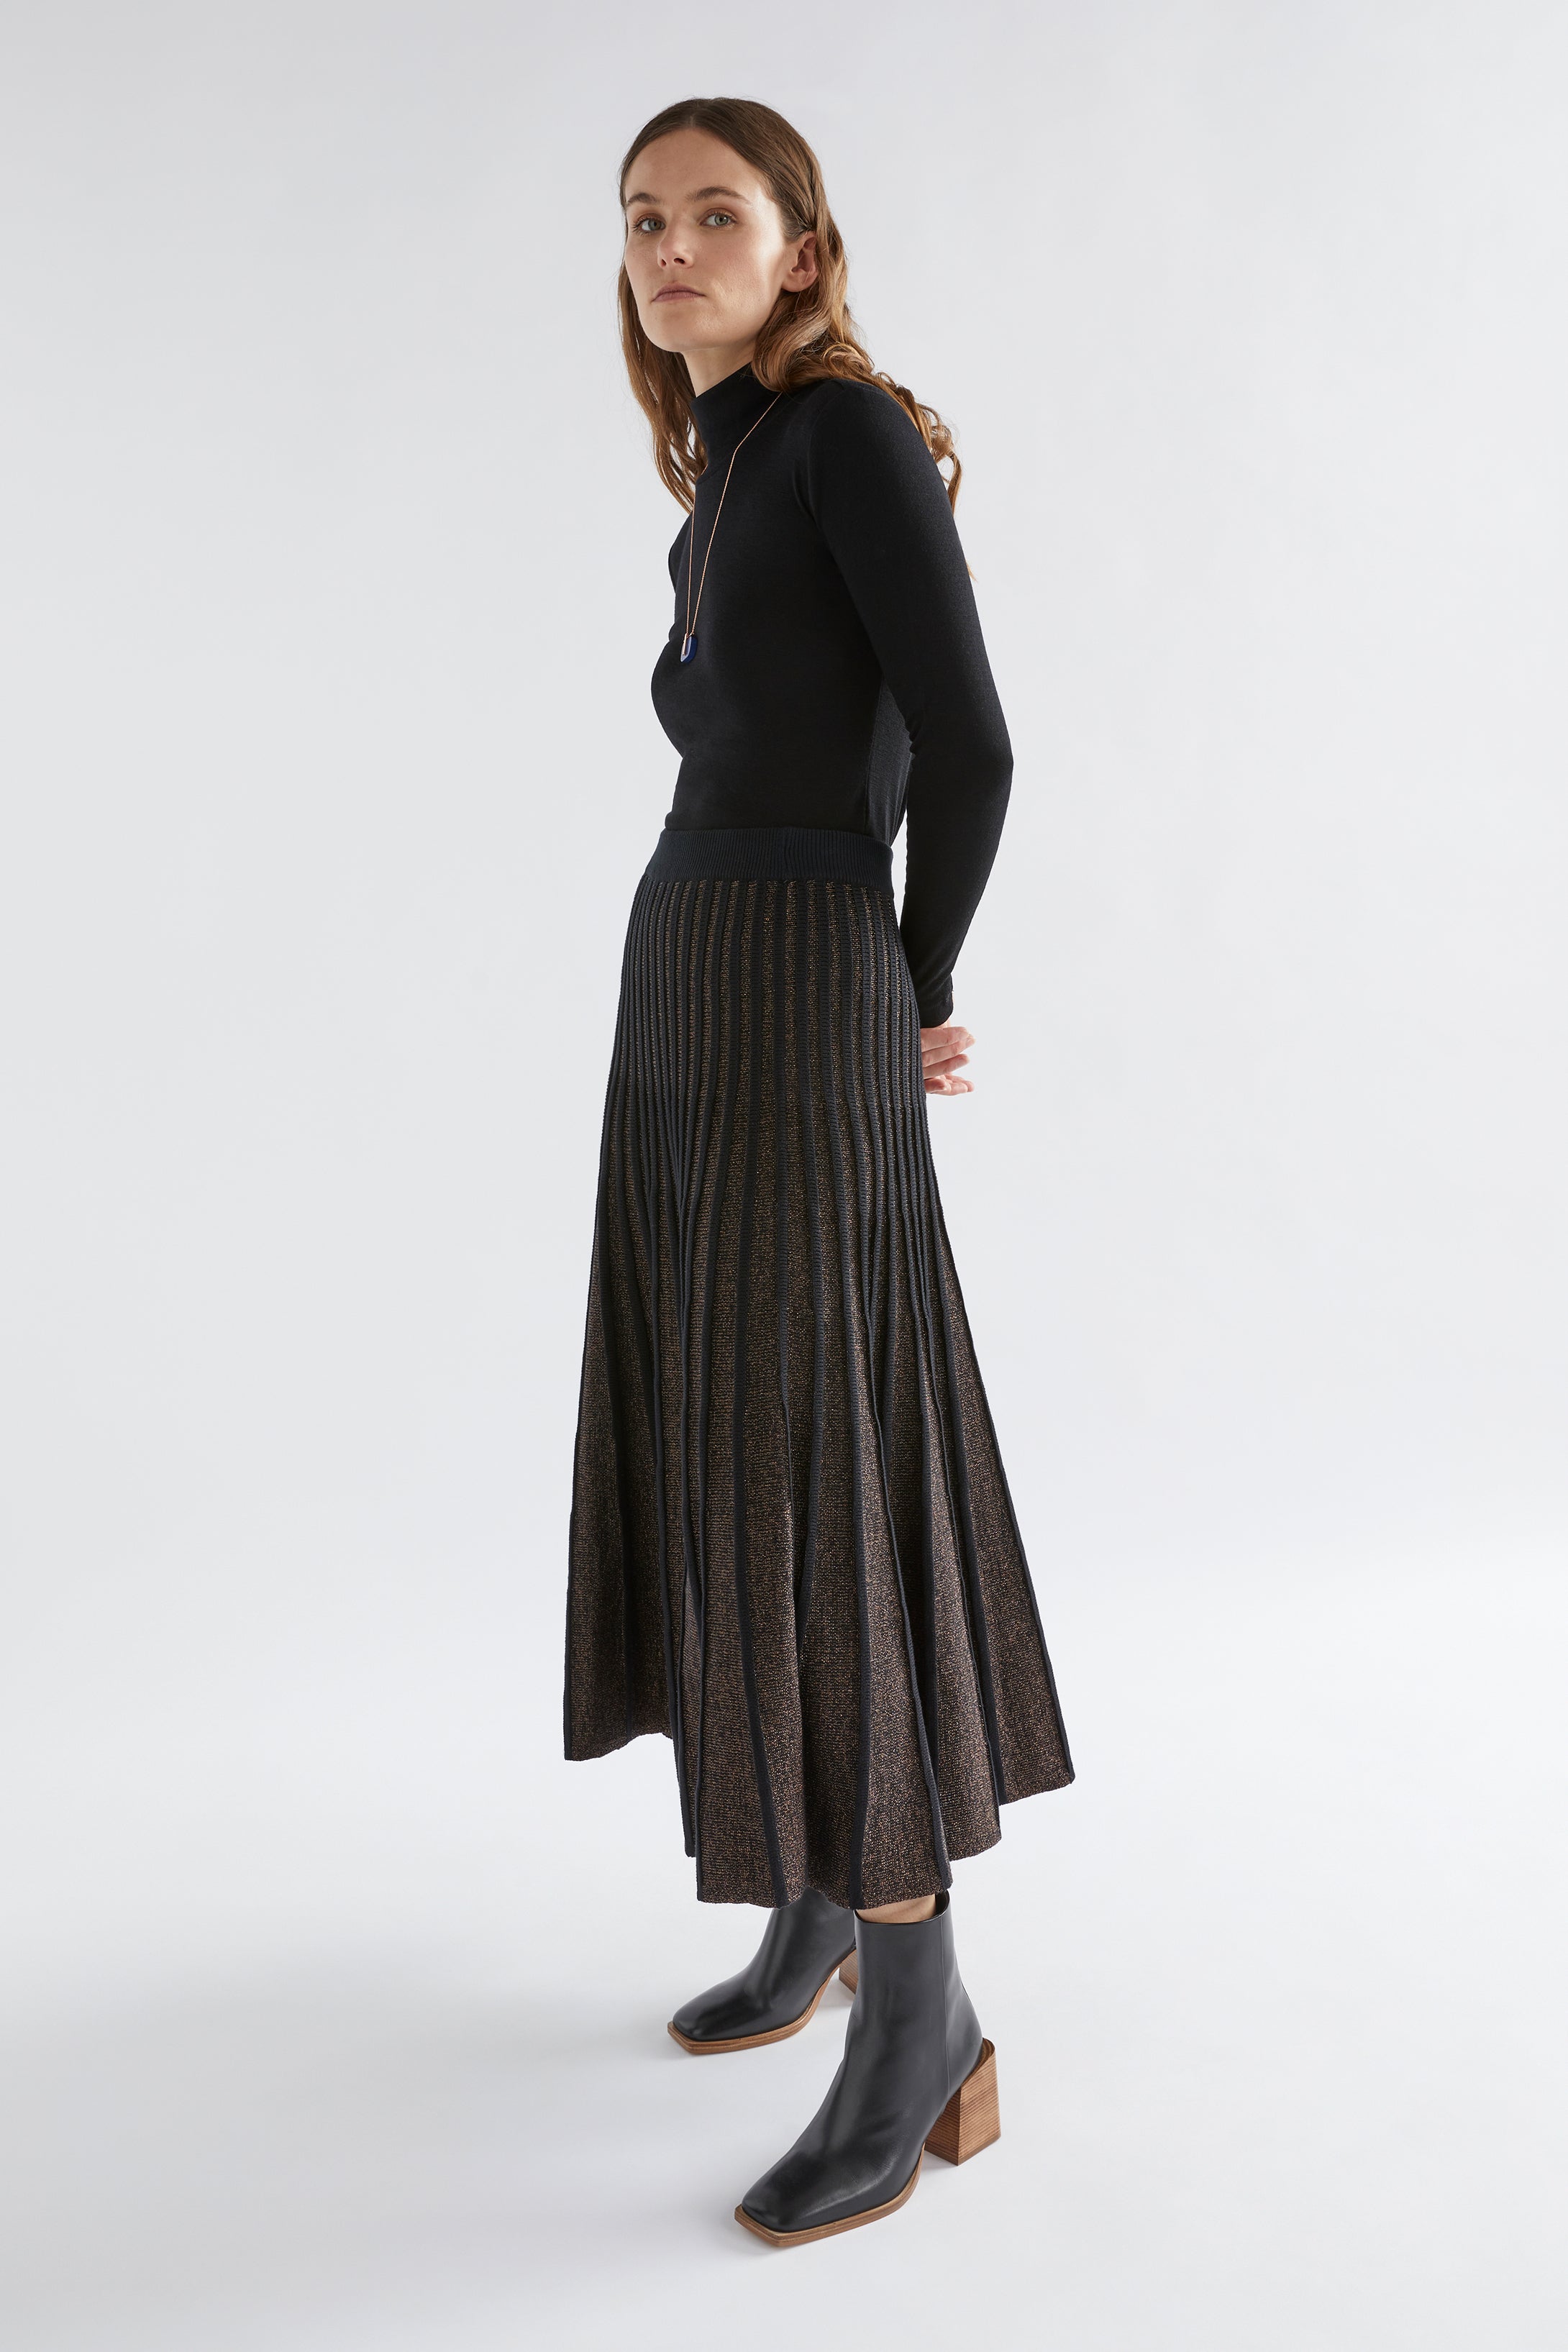 Glittra Lurex Knit Metallic A-Line Skirt Model Side Full Body | GOLDEN METALLIC